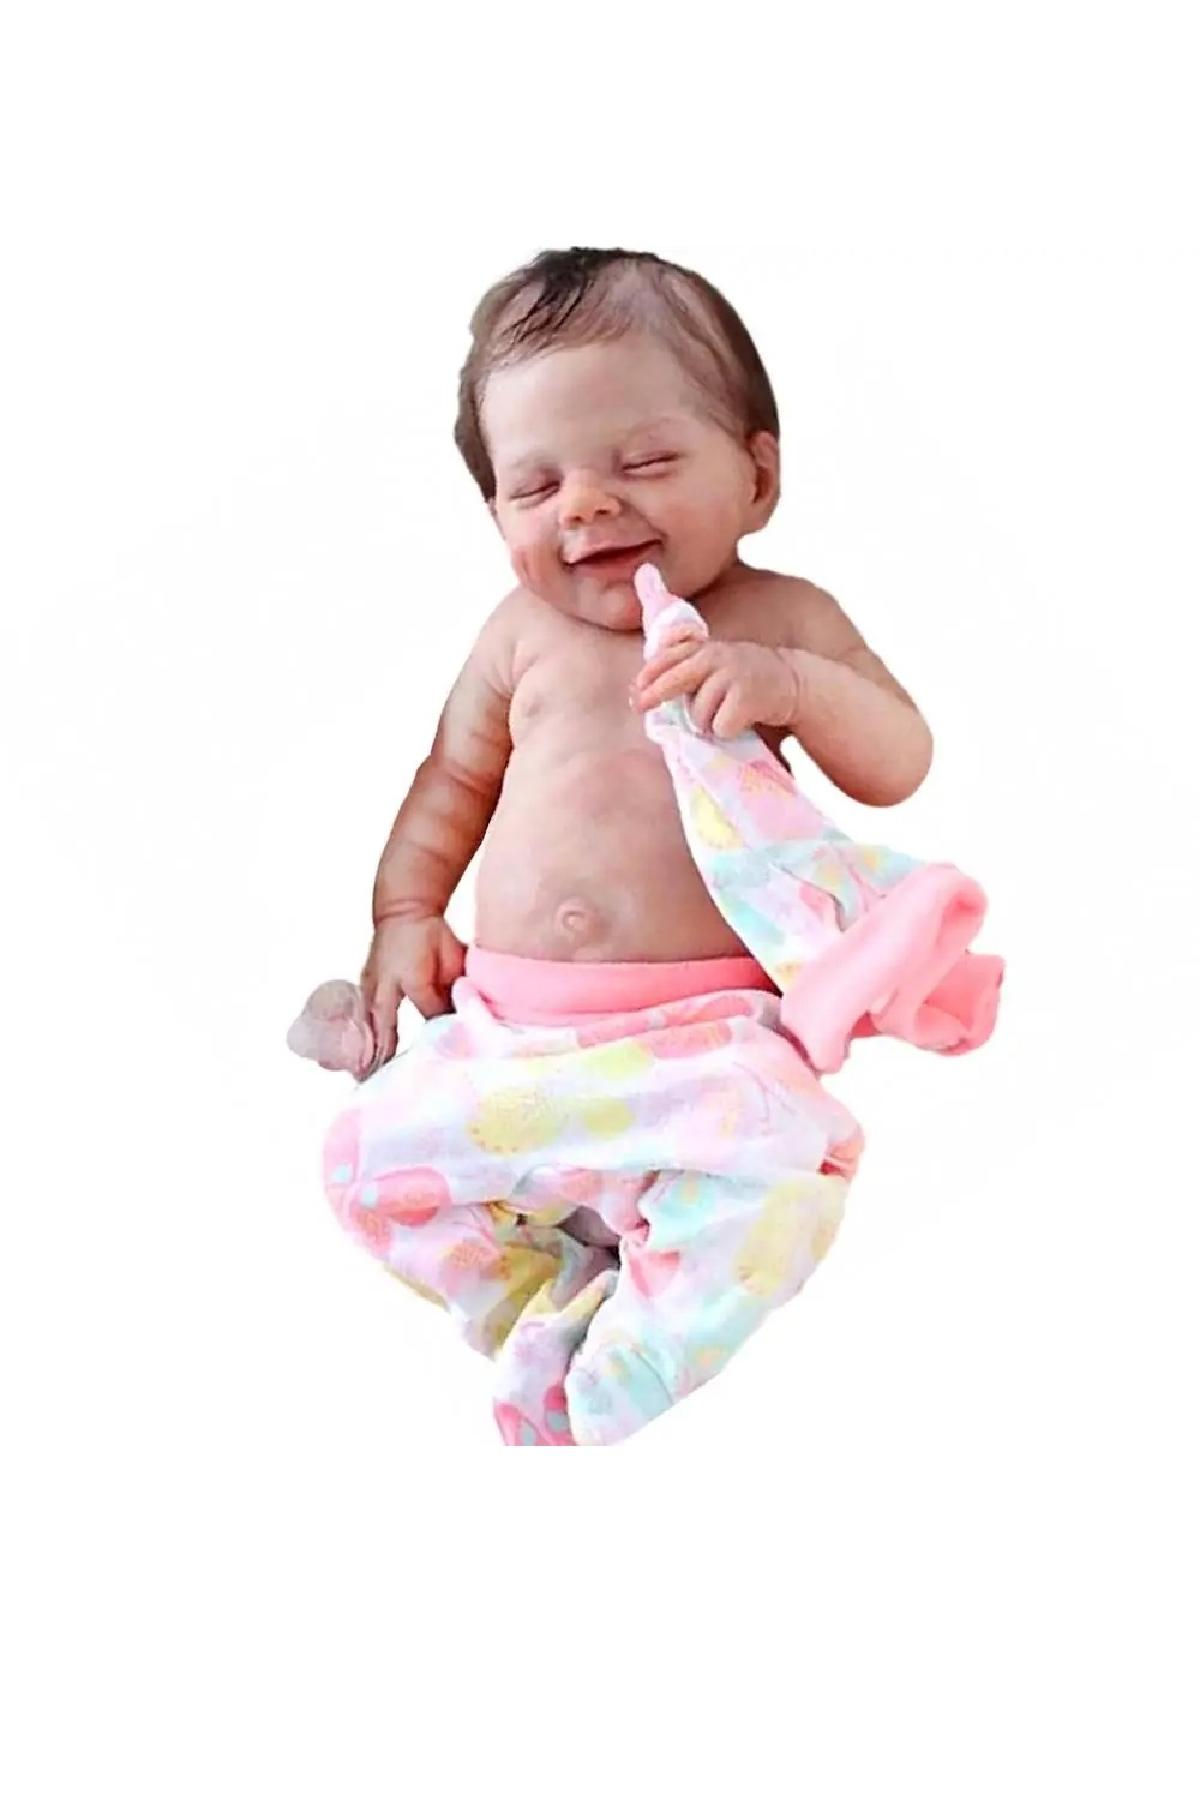 عروسک سیلیکونی نوزاد 1 ساله پسر کد.1033